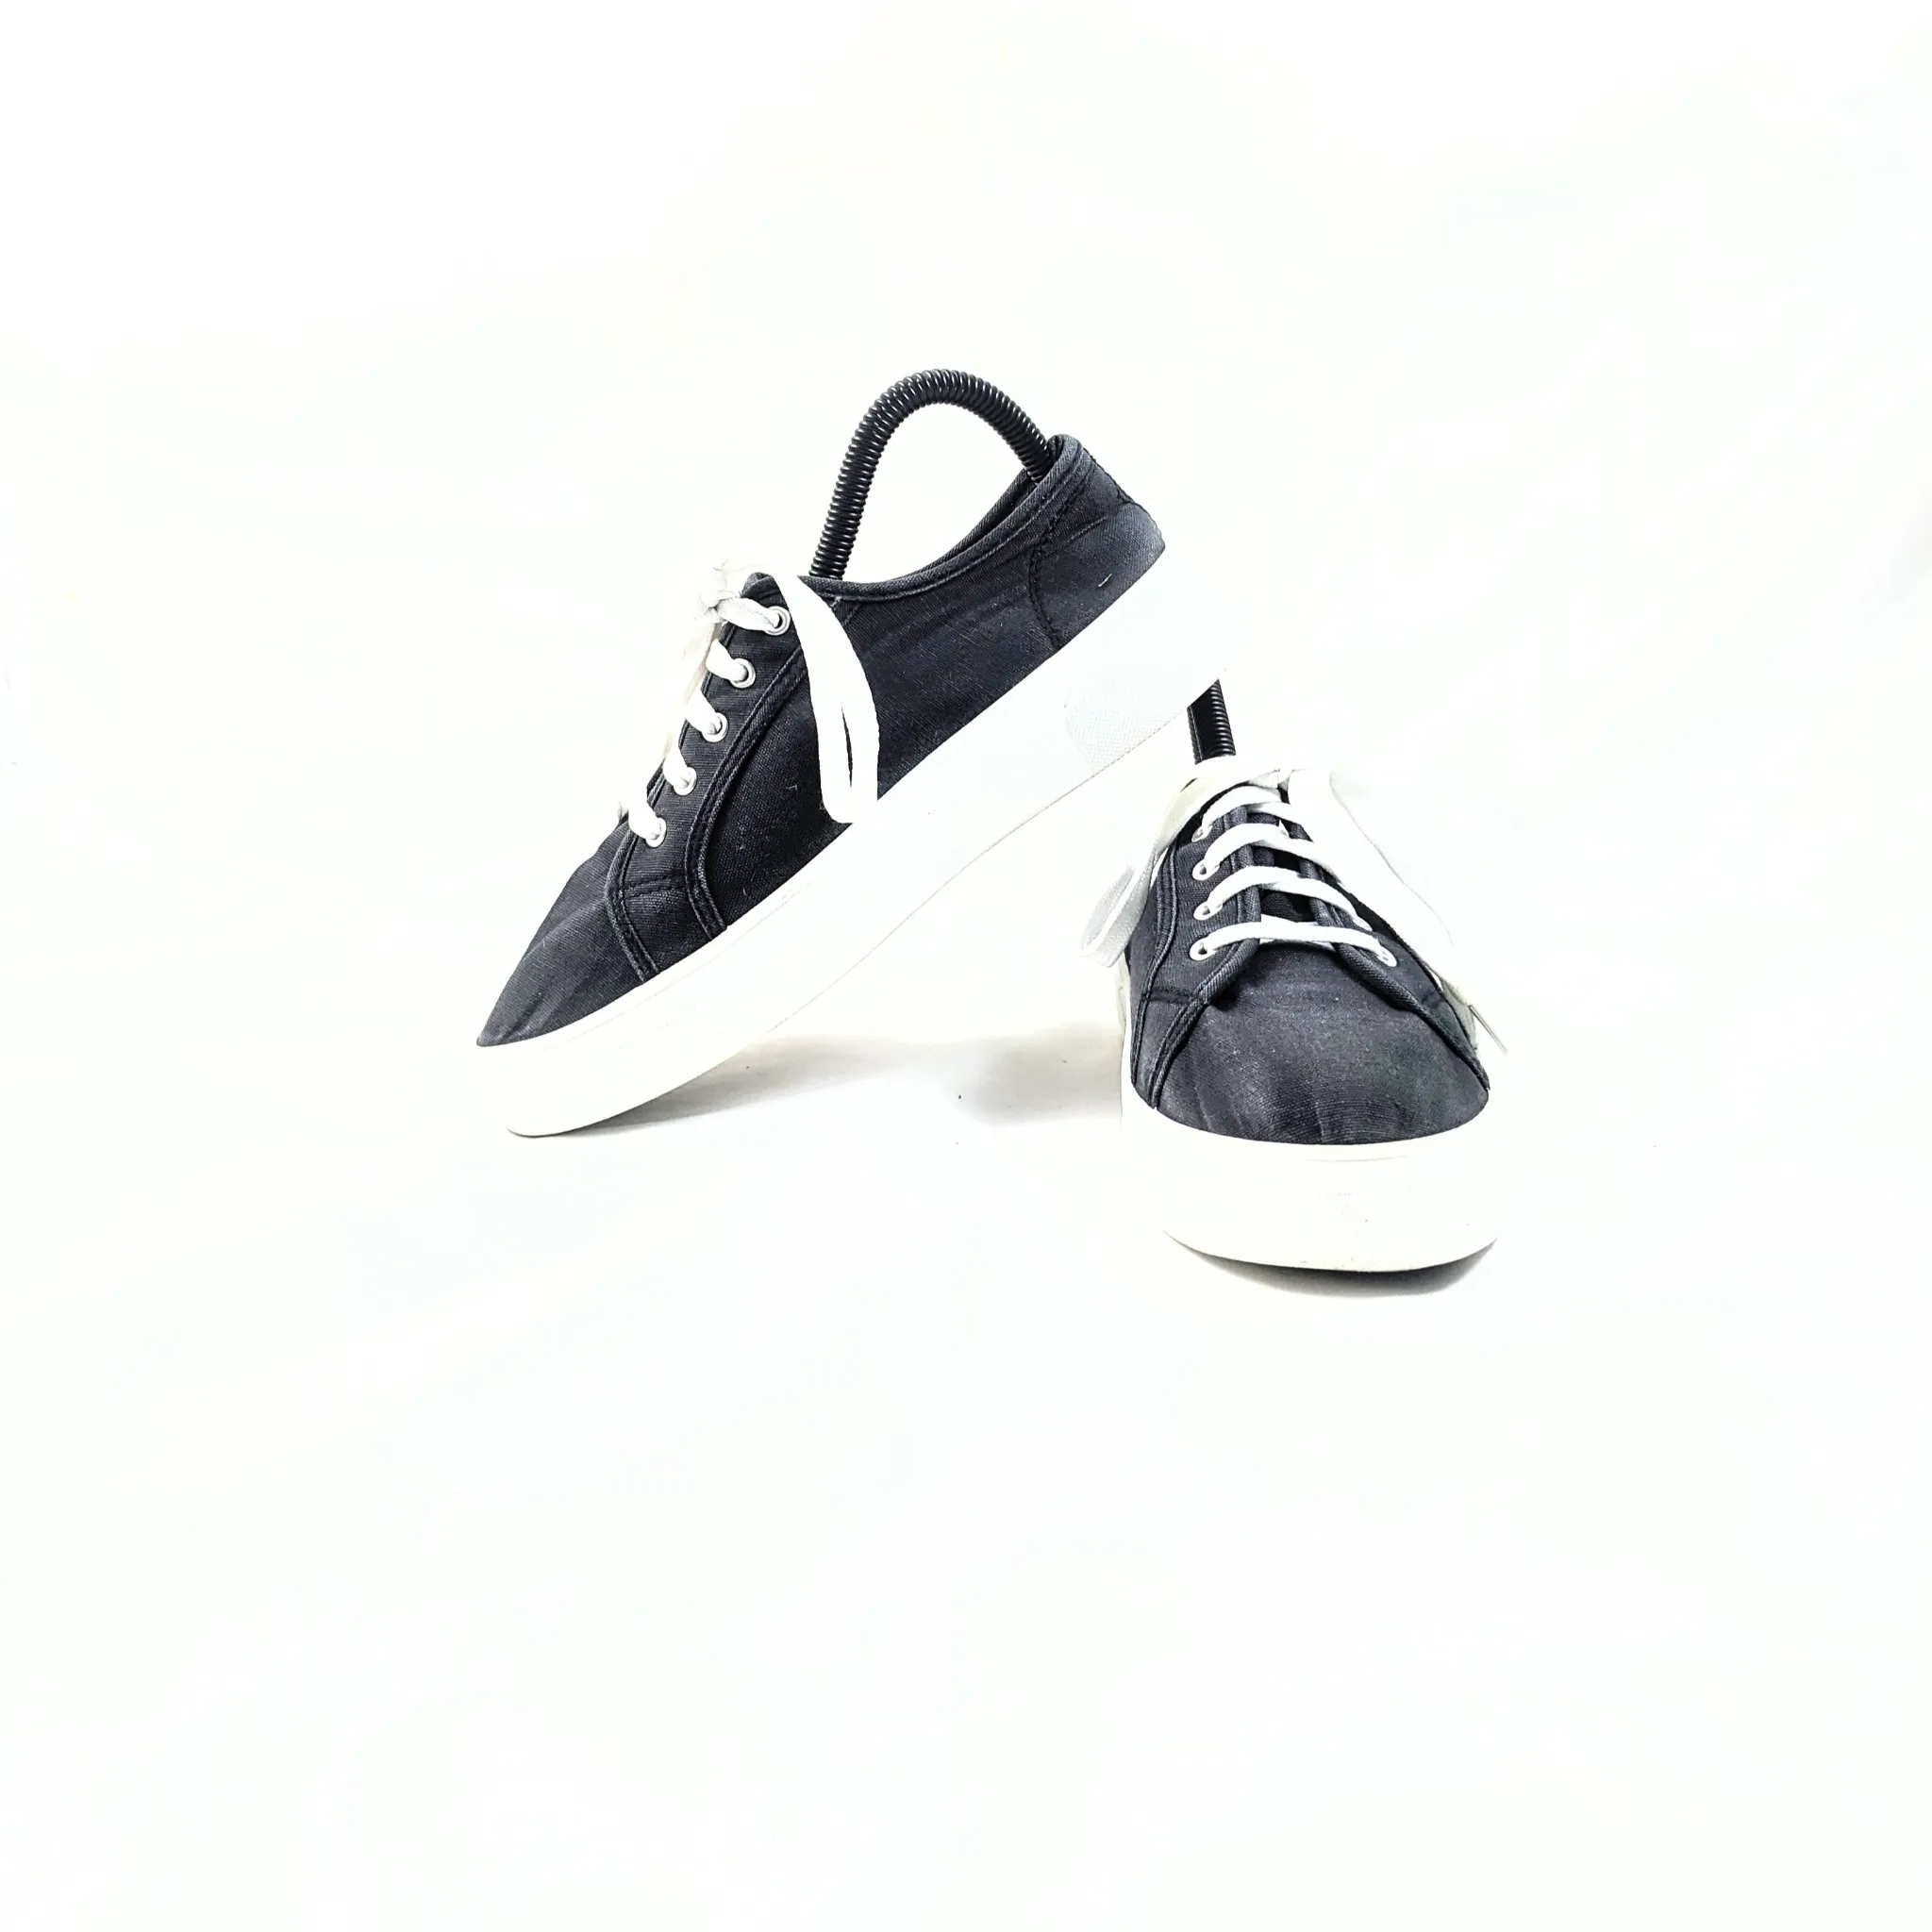 Anko Black Sneakers